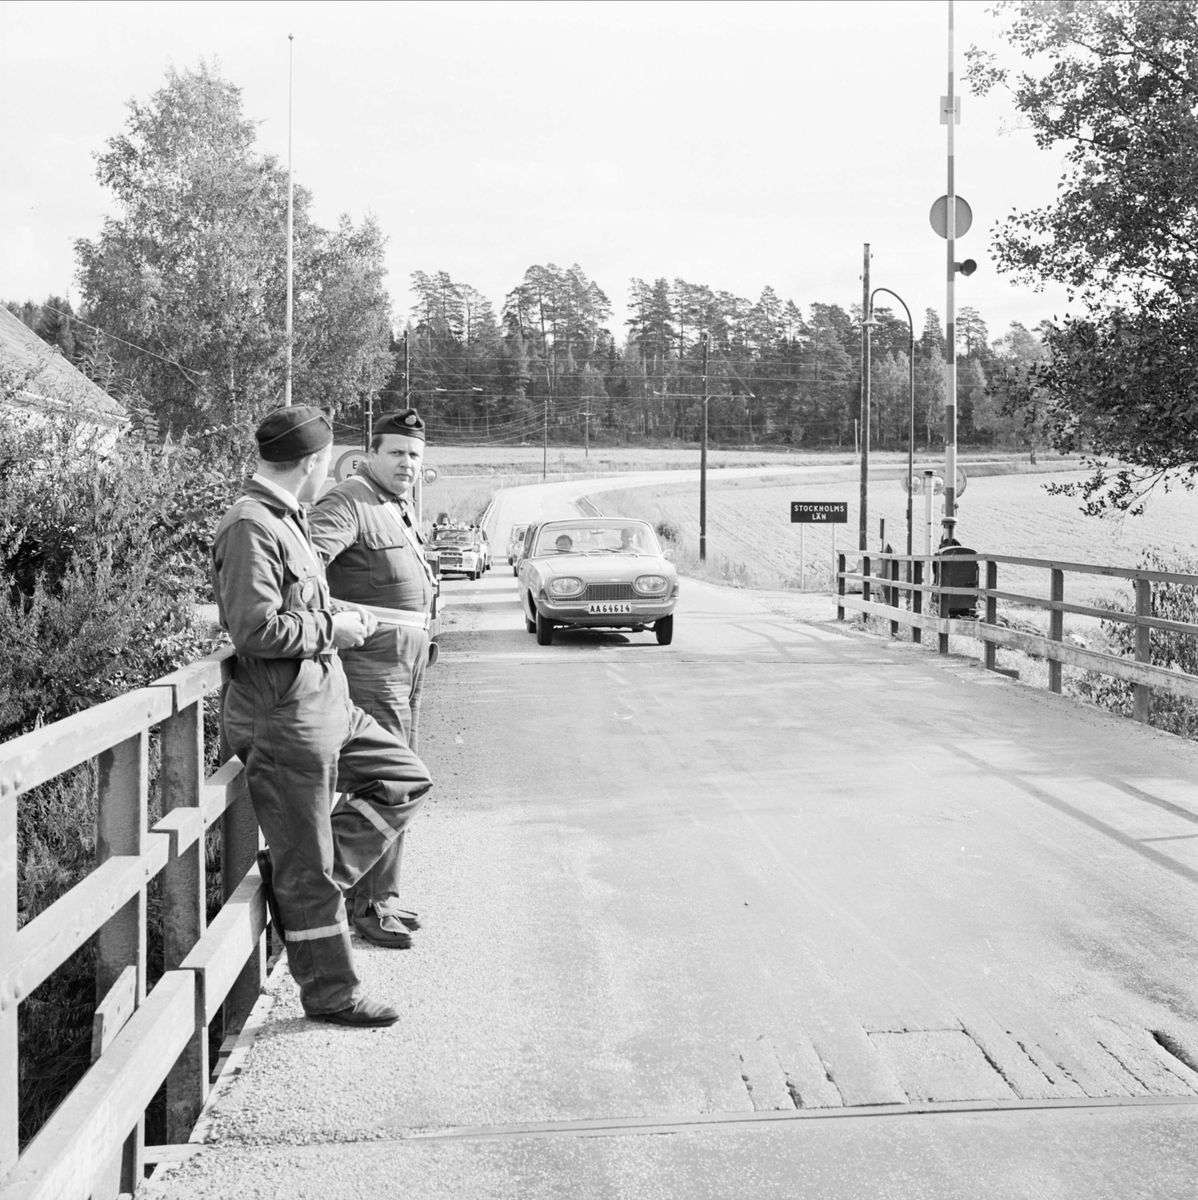 "Ulleråkersrymlingar - polisspärr", Flottsund, Uppsala 1967